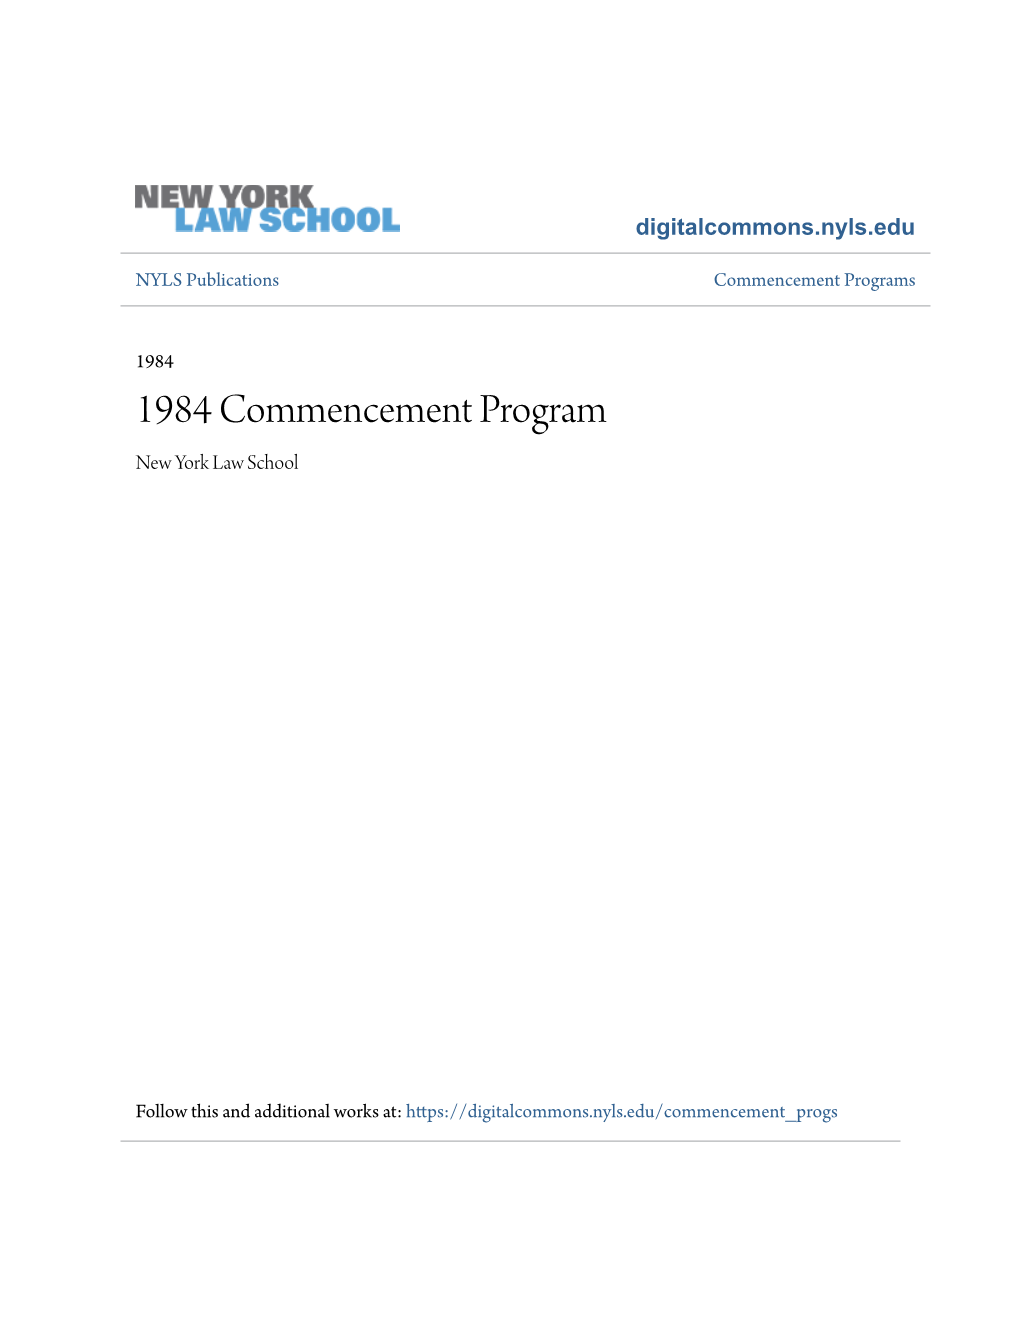 1984 Commencement Program New York Law School